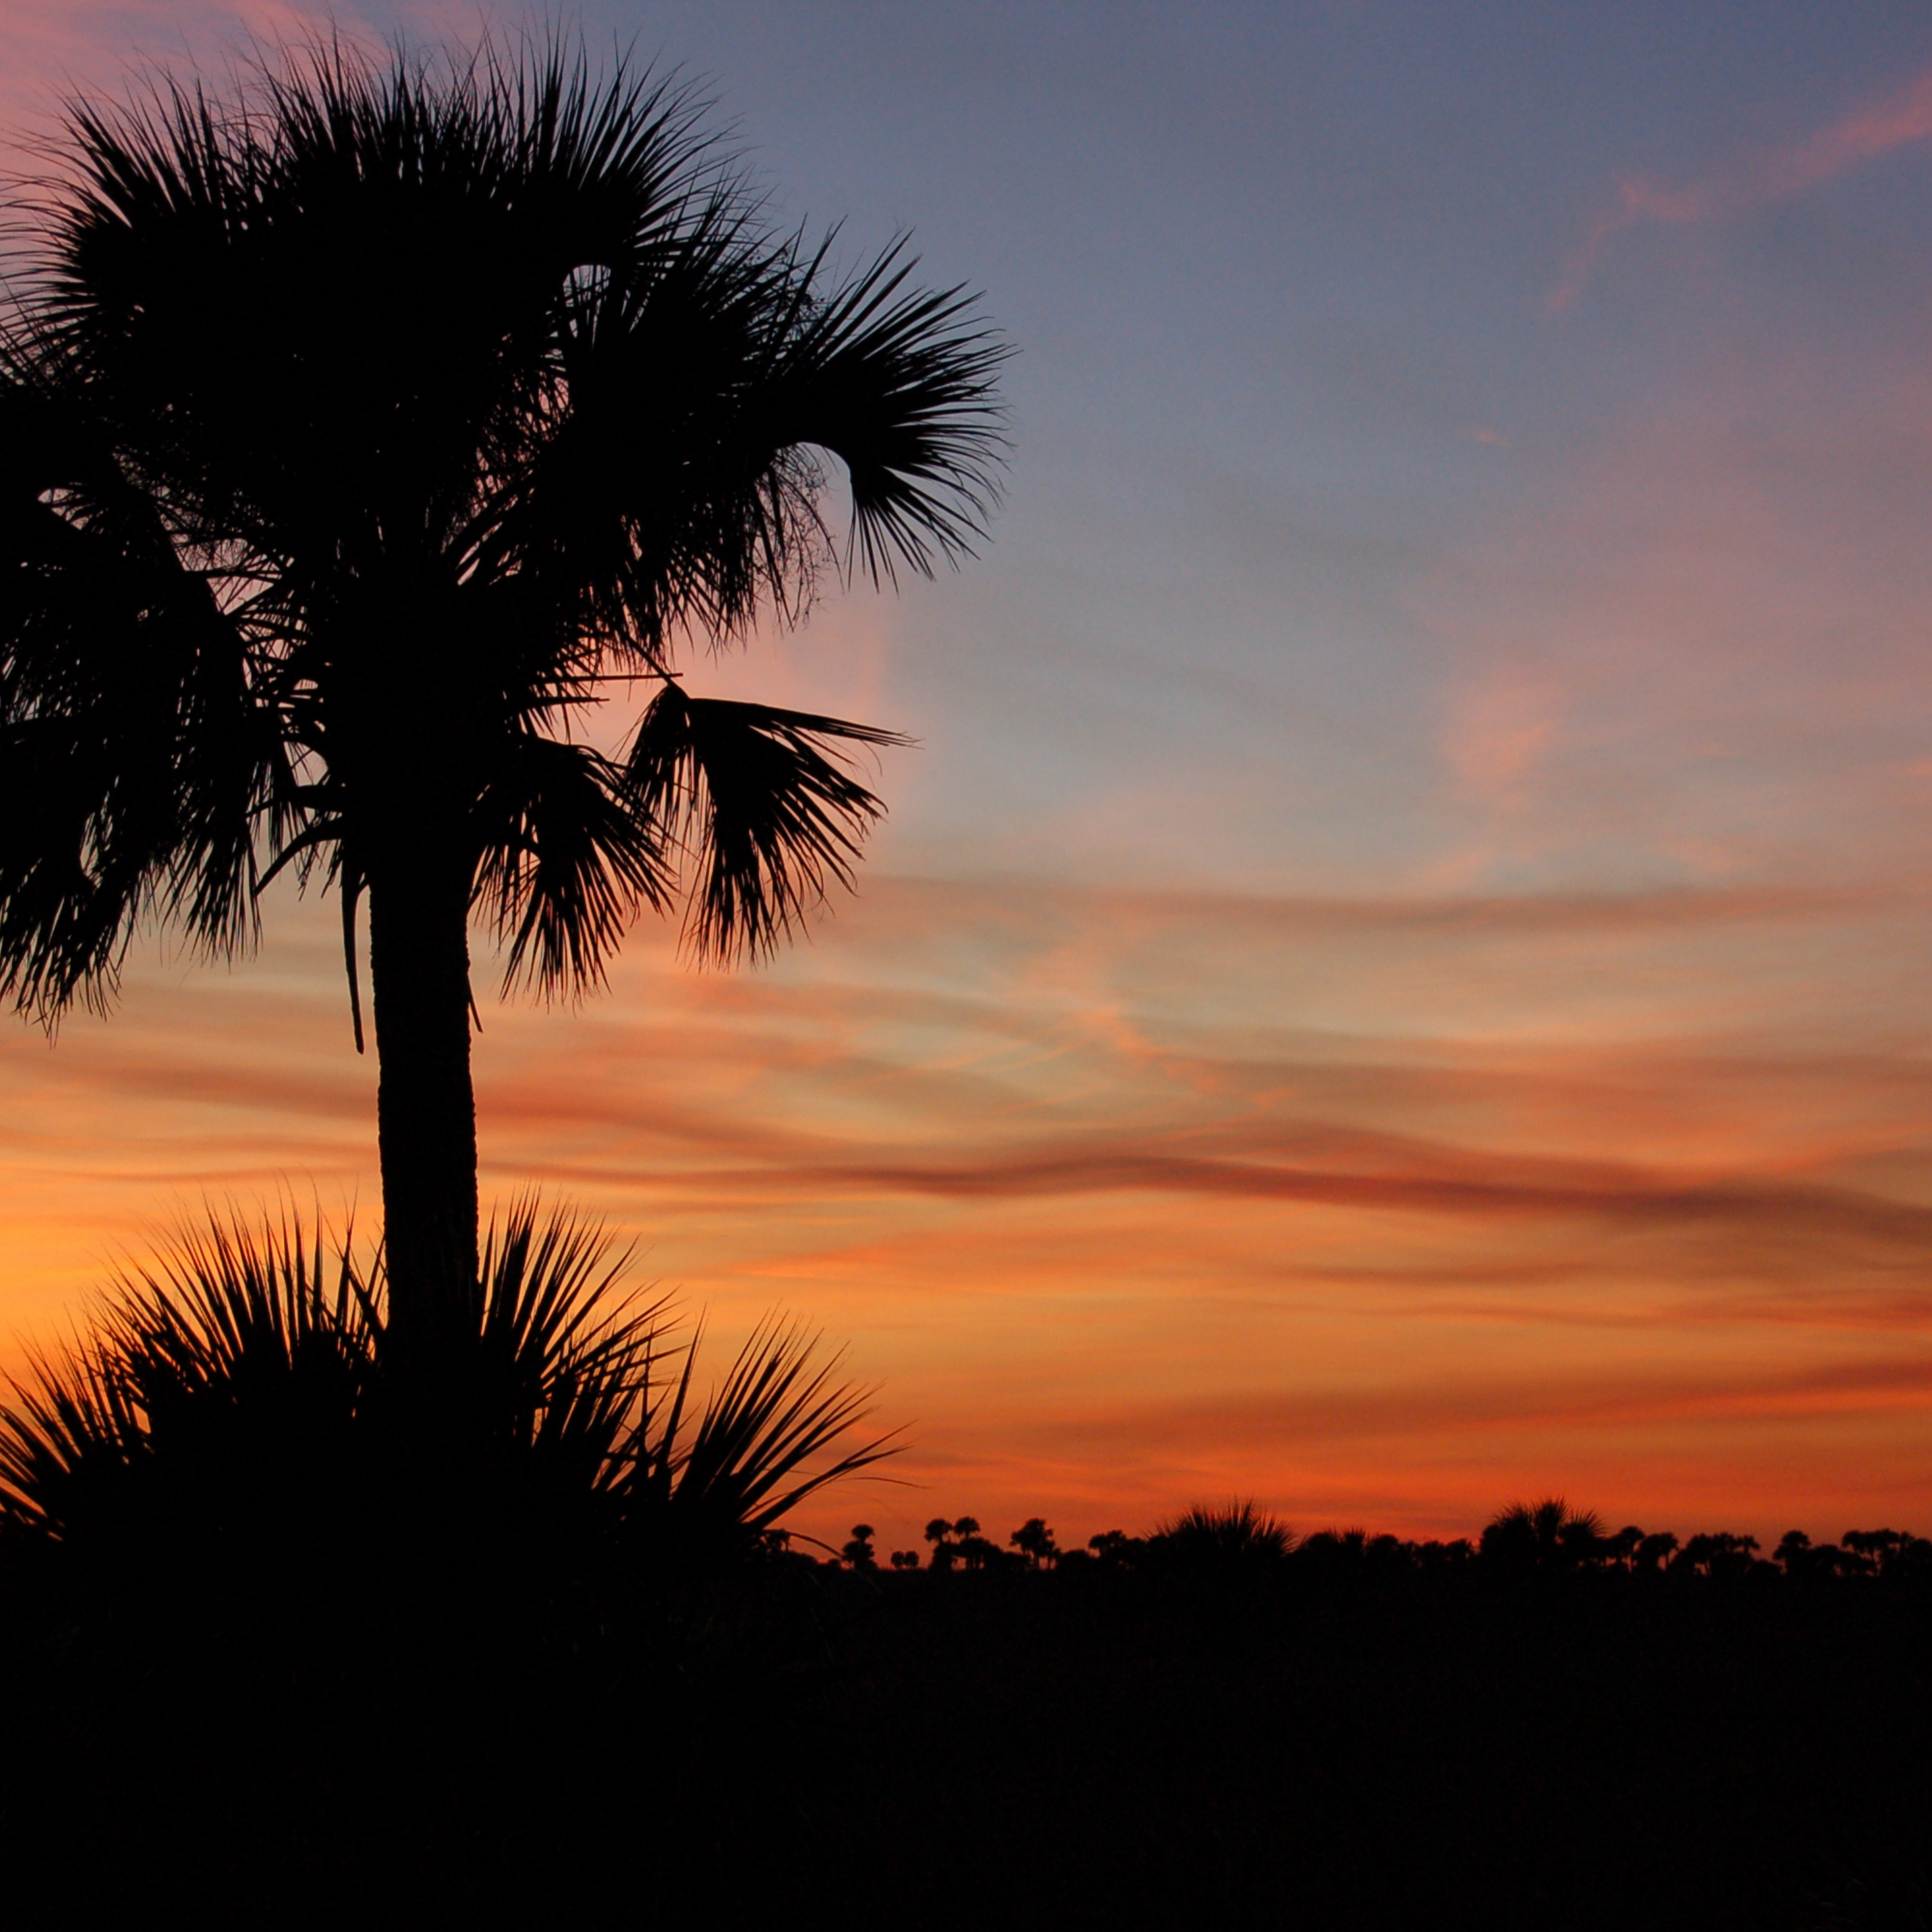 THE FLORIDA SUNSET PREMIUM STEAK SAMPLER